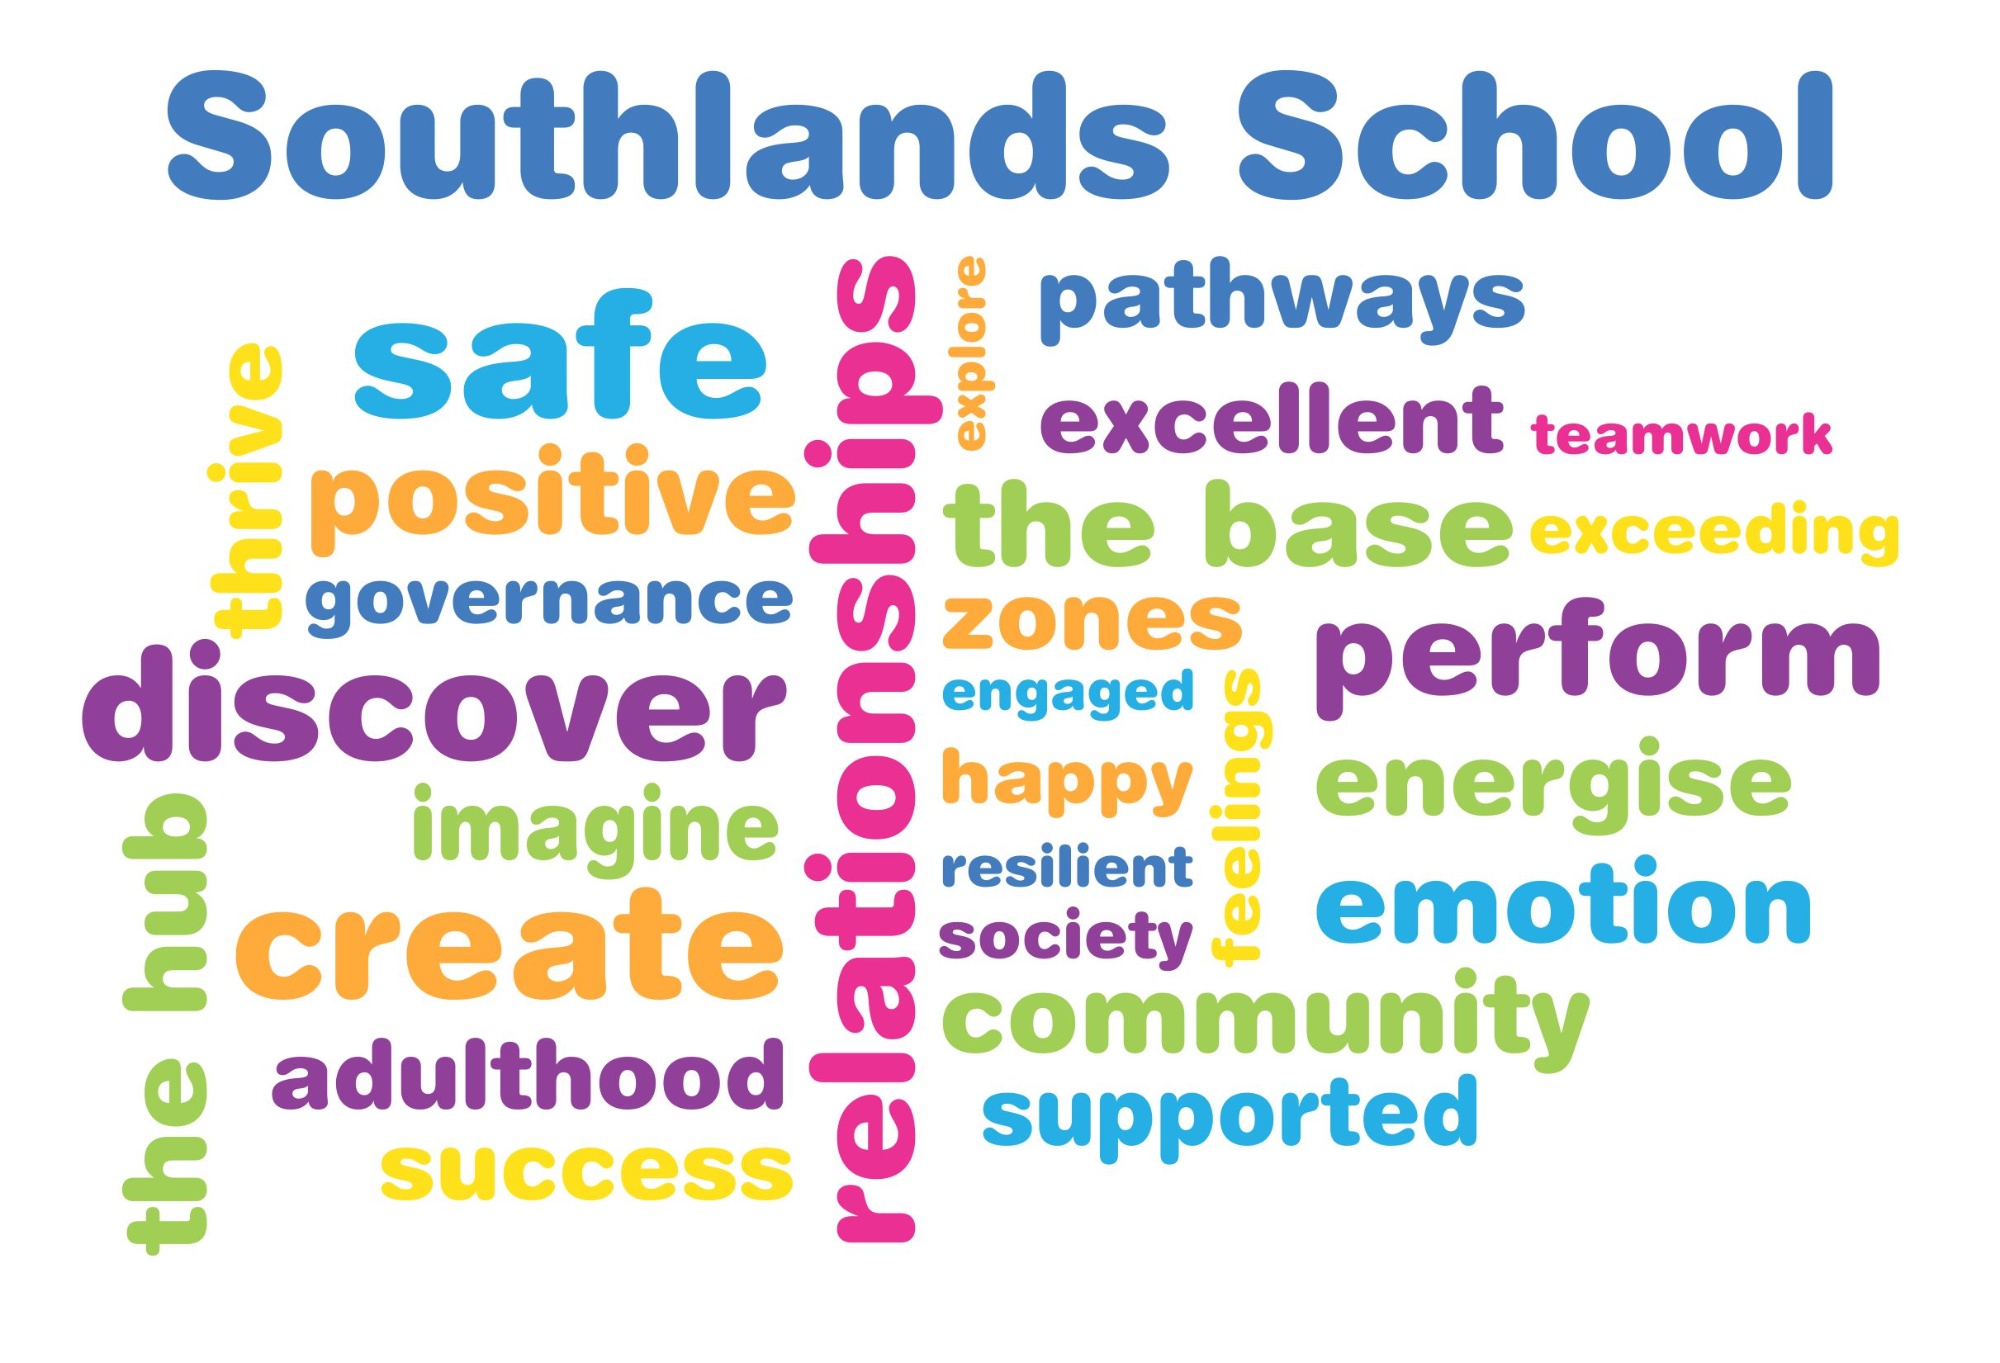 Southlands school inspirational wall